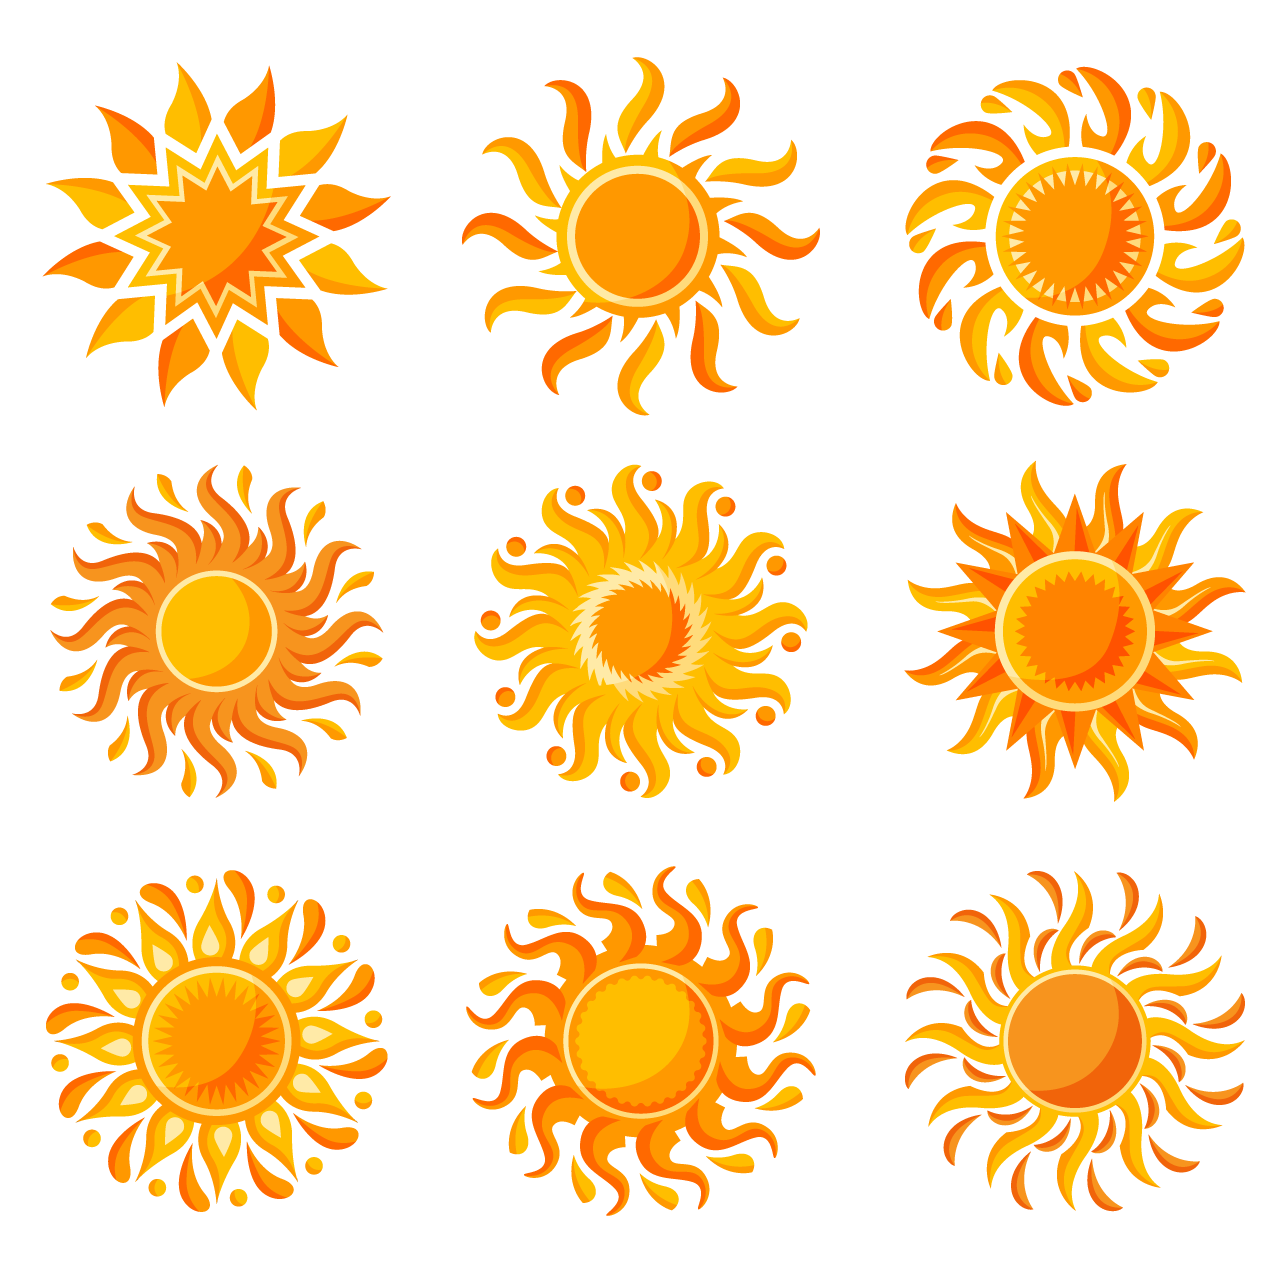 Sun icon collection cartoon illustration image